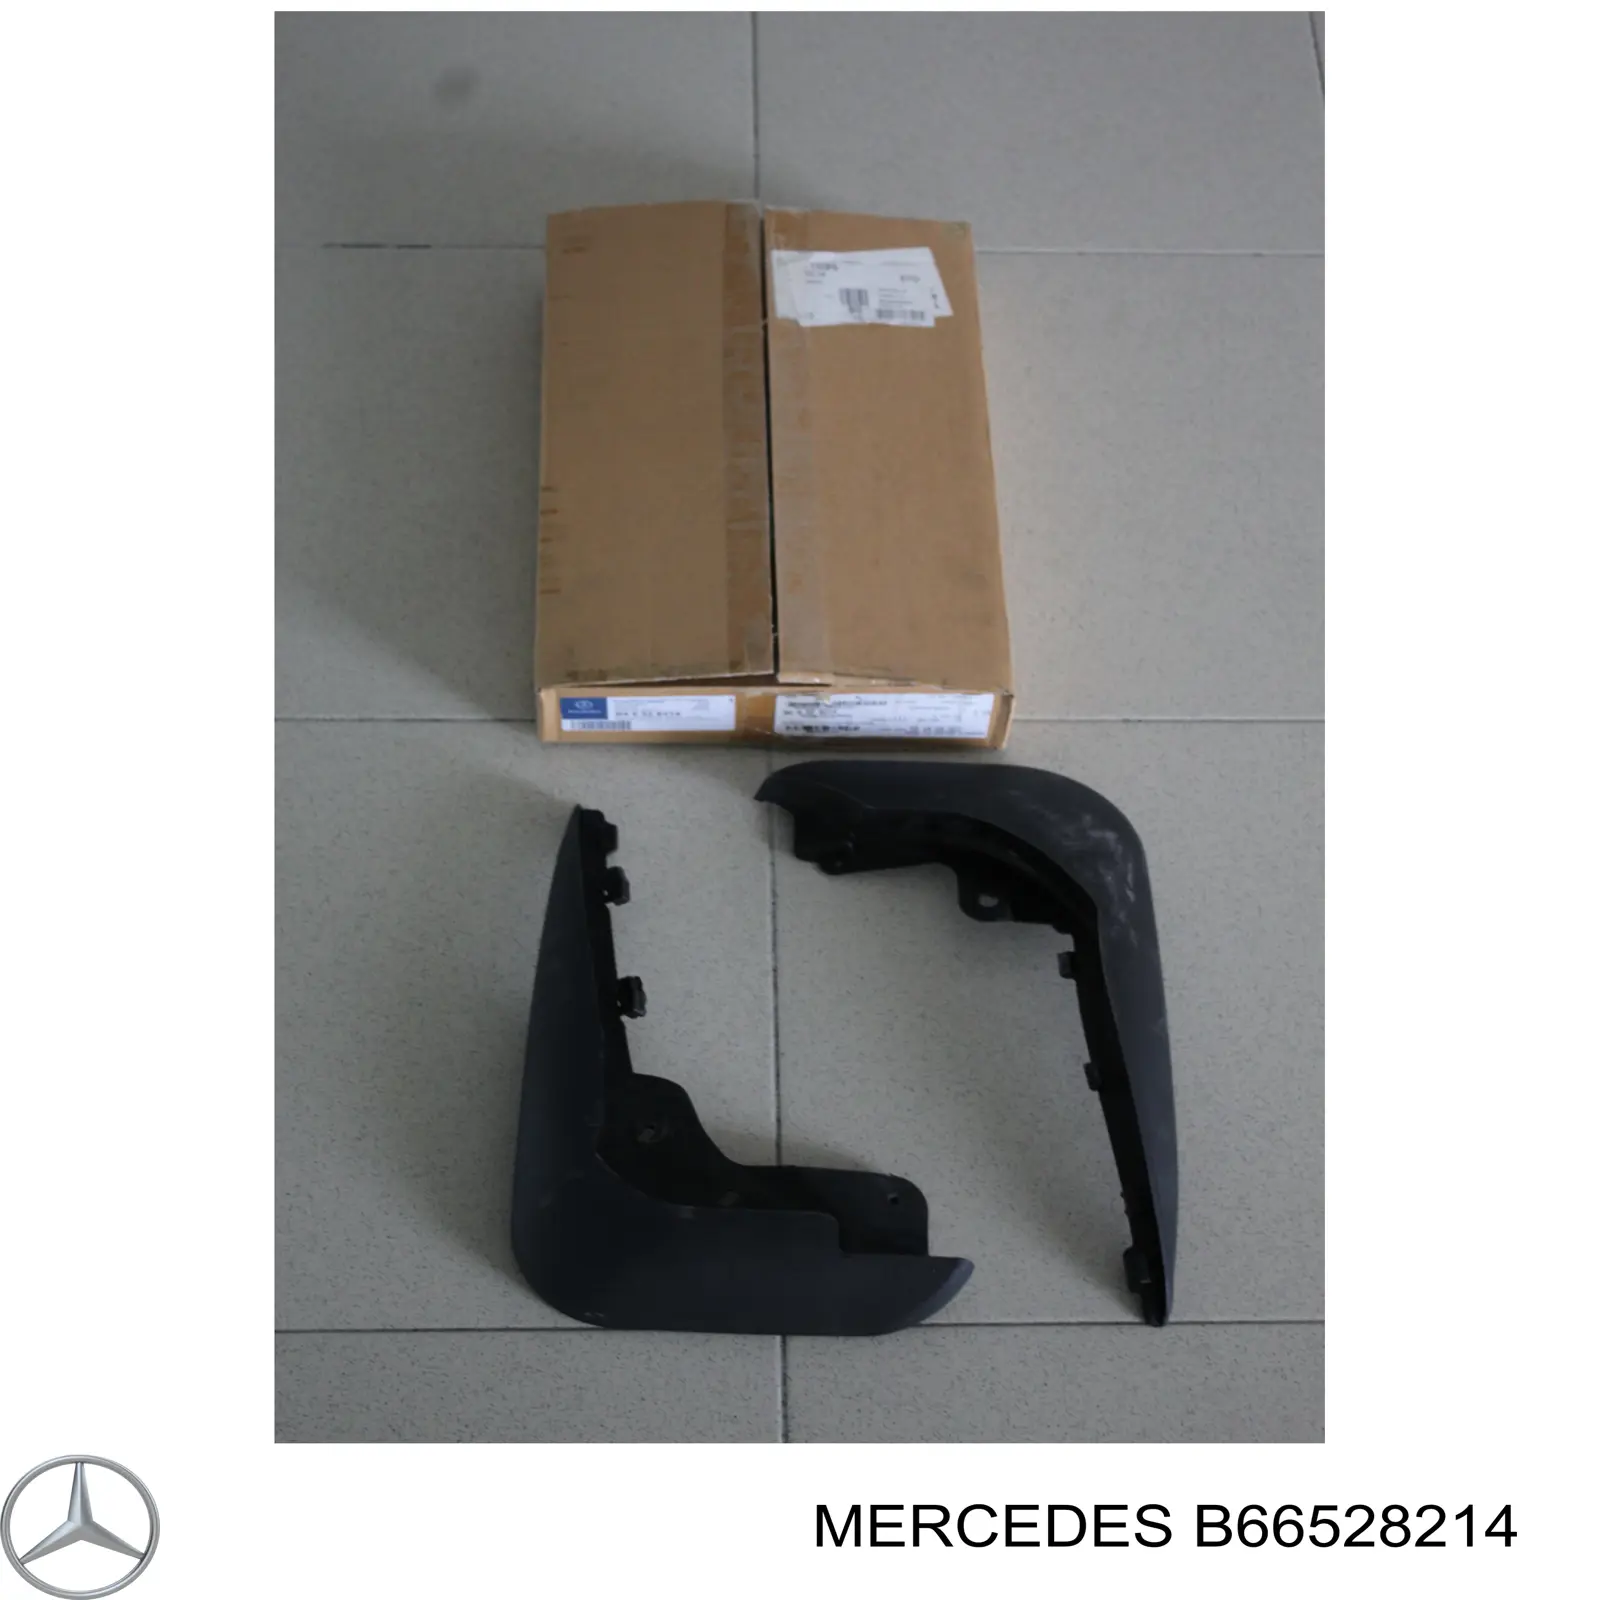 B66528214 Mercedes брызговики передние, комплект